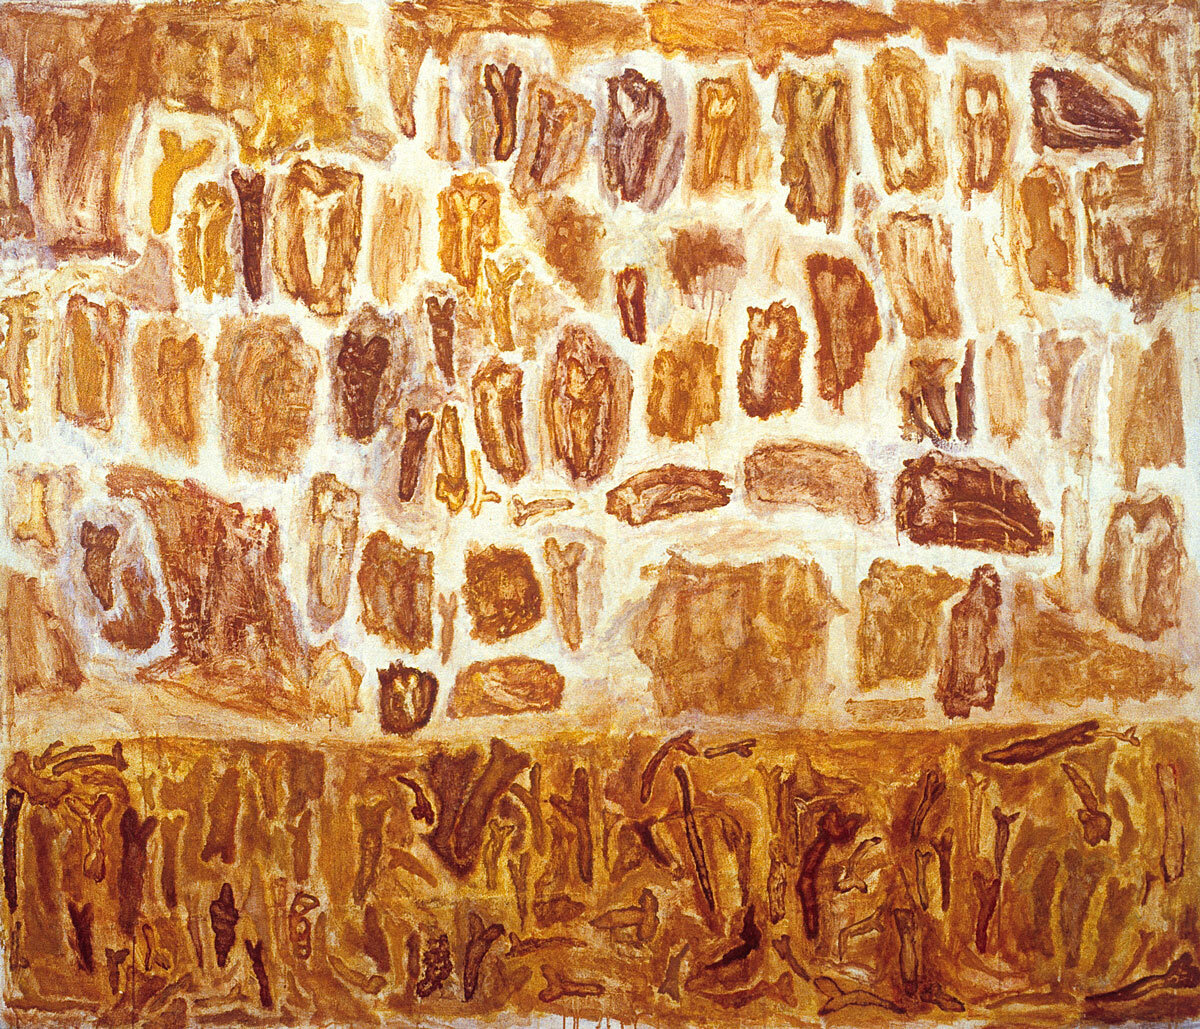   The Eternal Present,  1986, acrylic, cast gesso and gauze on canvas, 6 x 7 feet 